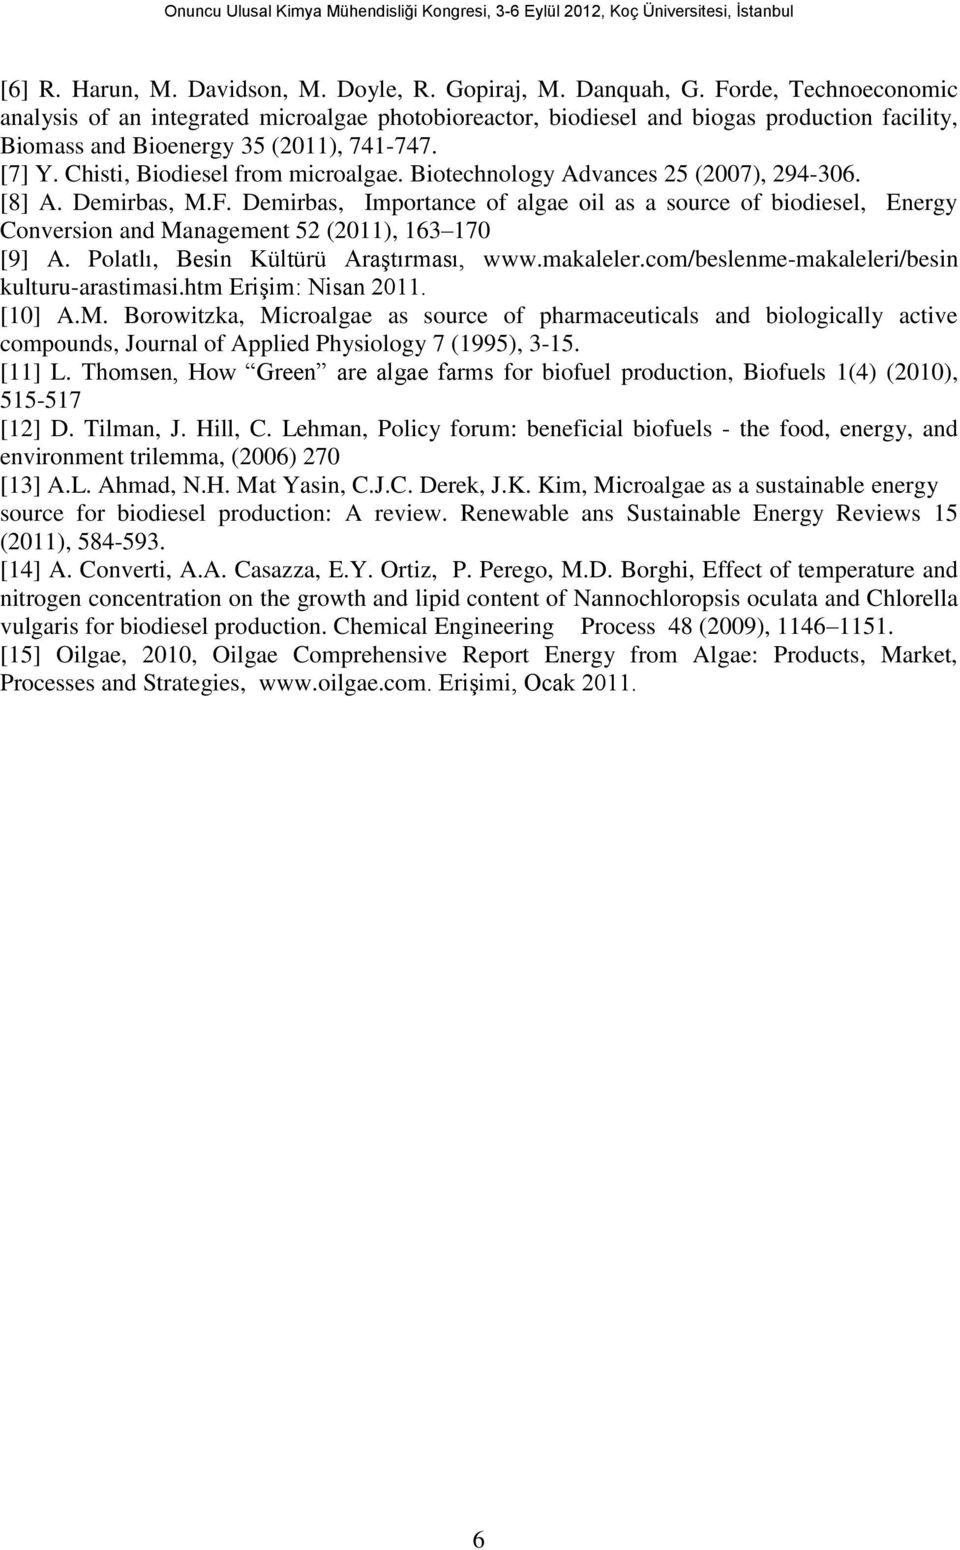 Chisti, Biodiesel from microalgae. Biotechnology Advances 25 (2007), 294-306. [8] A. Demirbas, M.F.